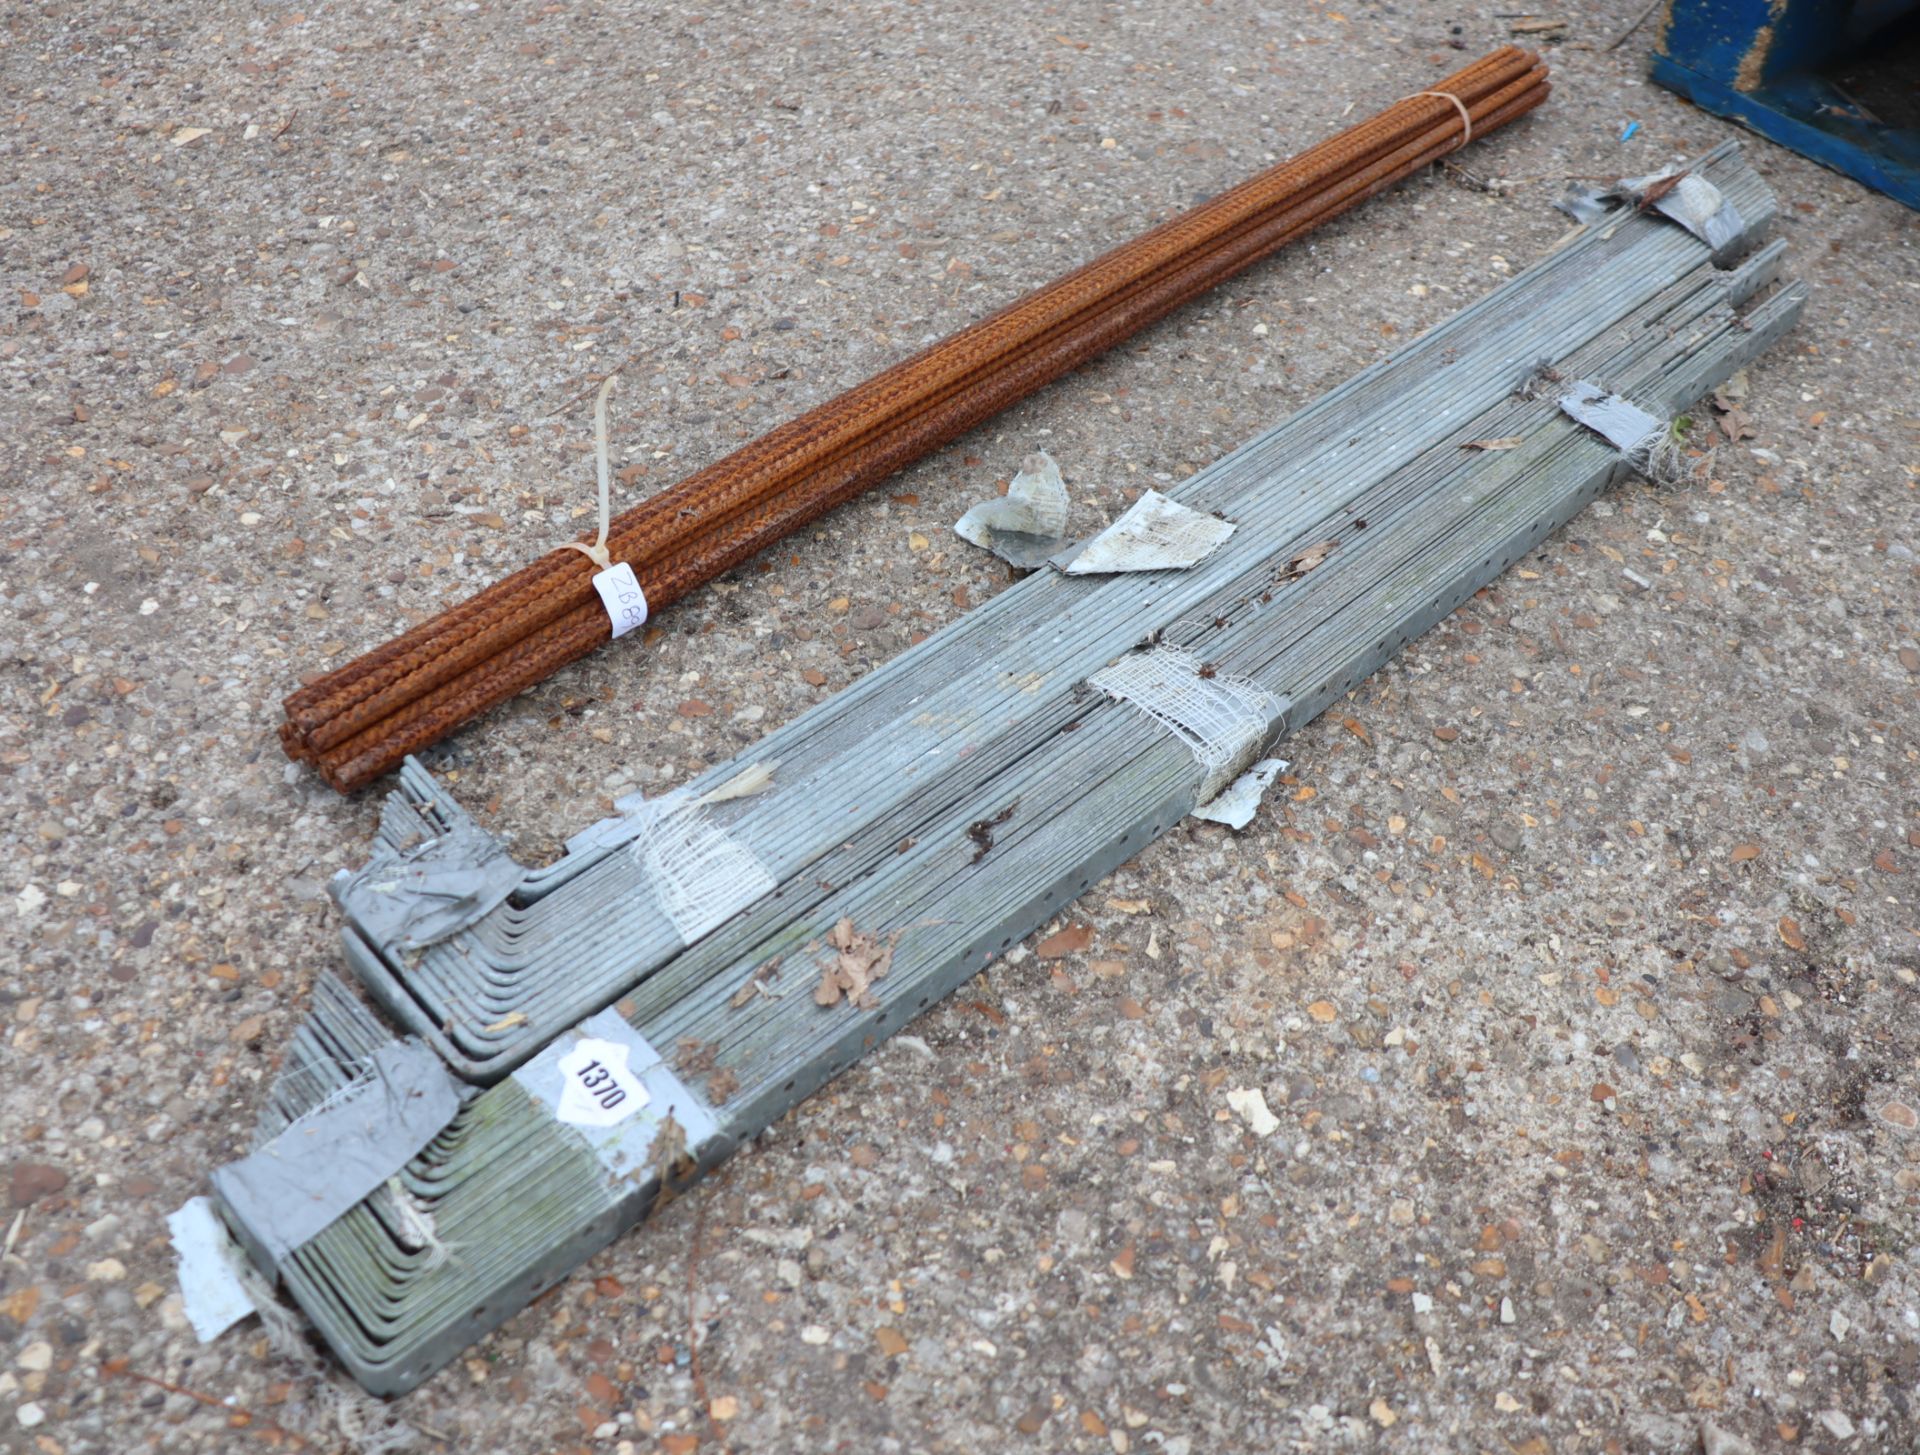 Bundle of rebar with 2 bundles of roofing straps